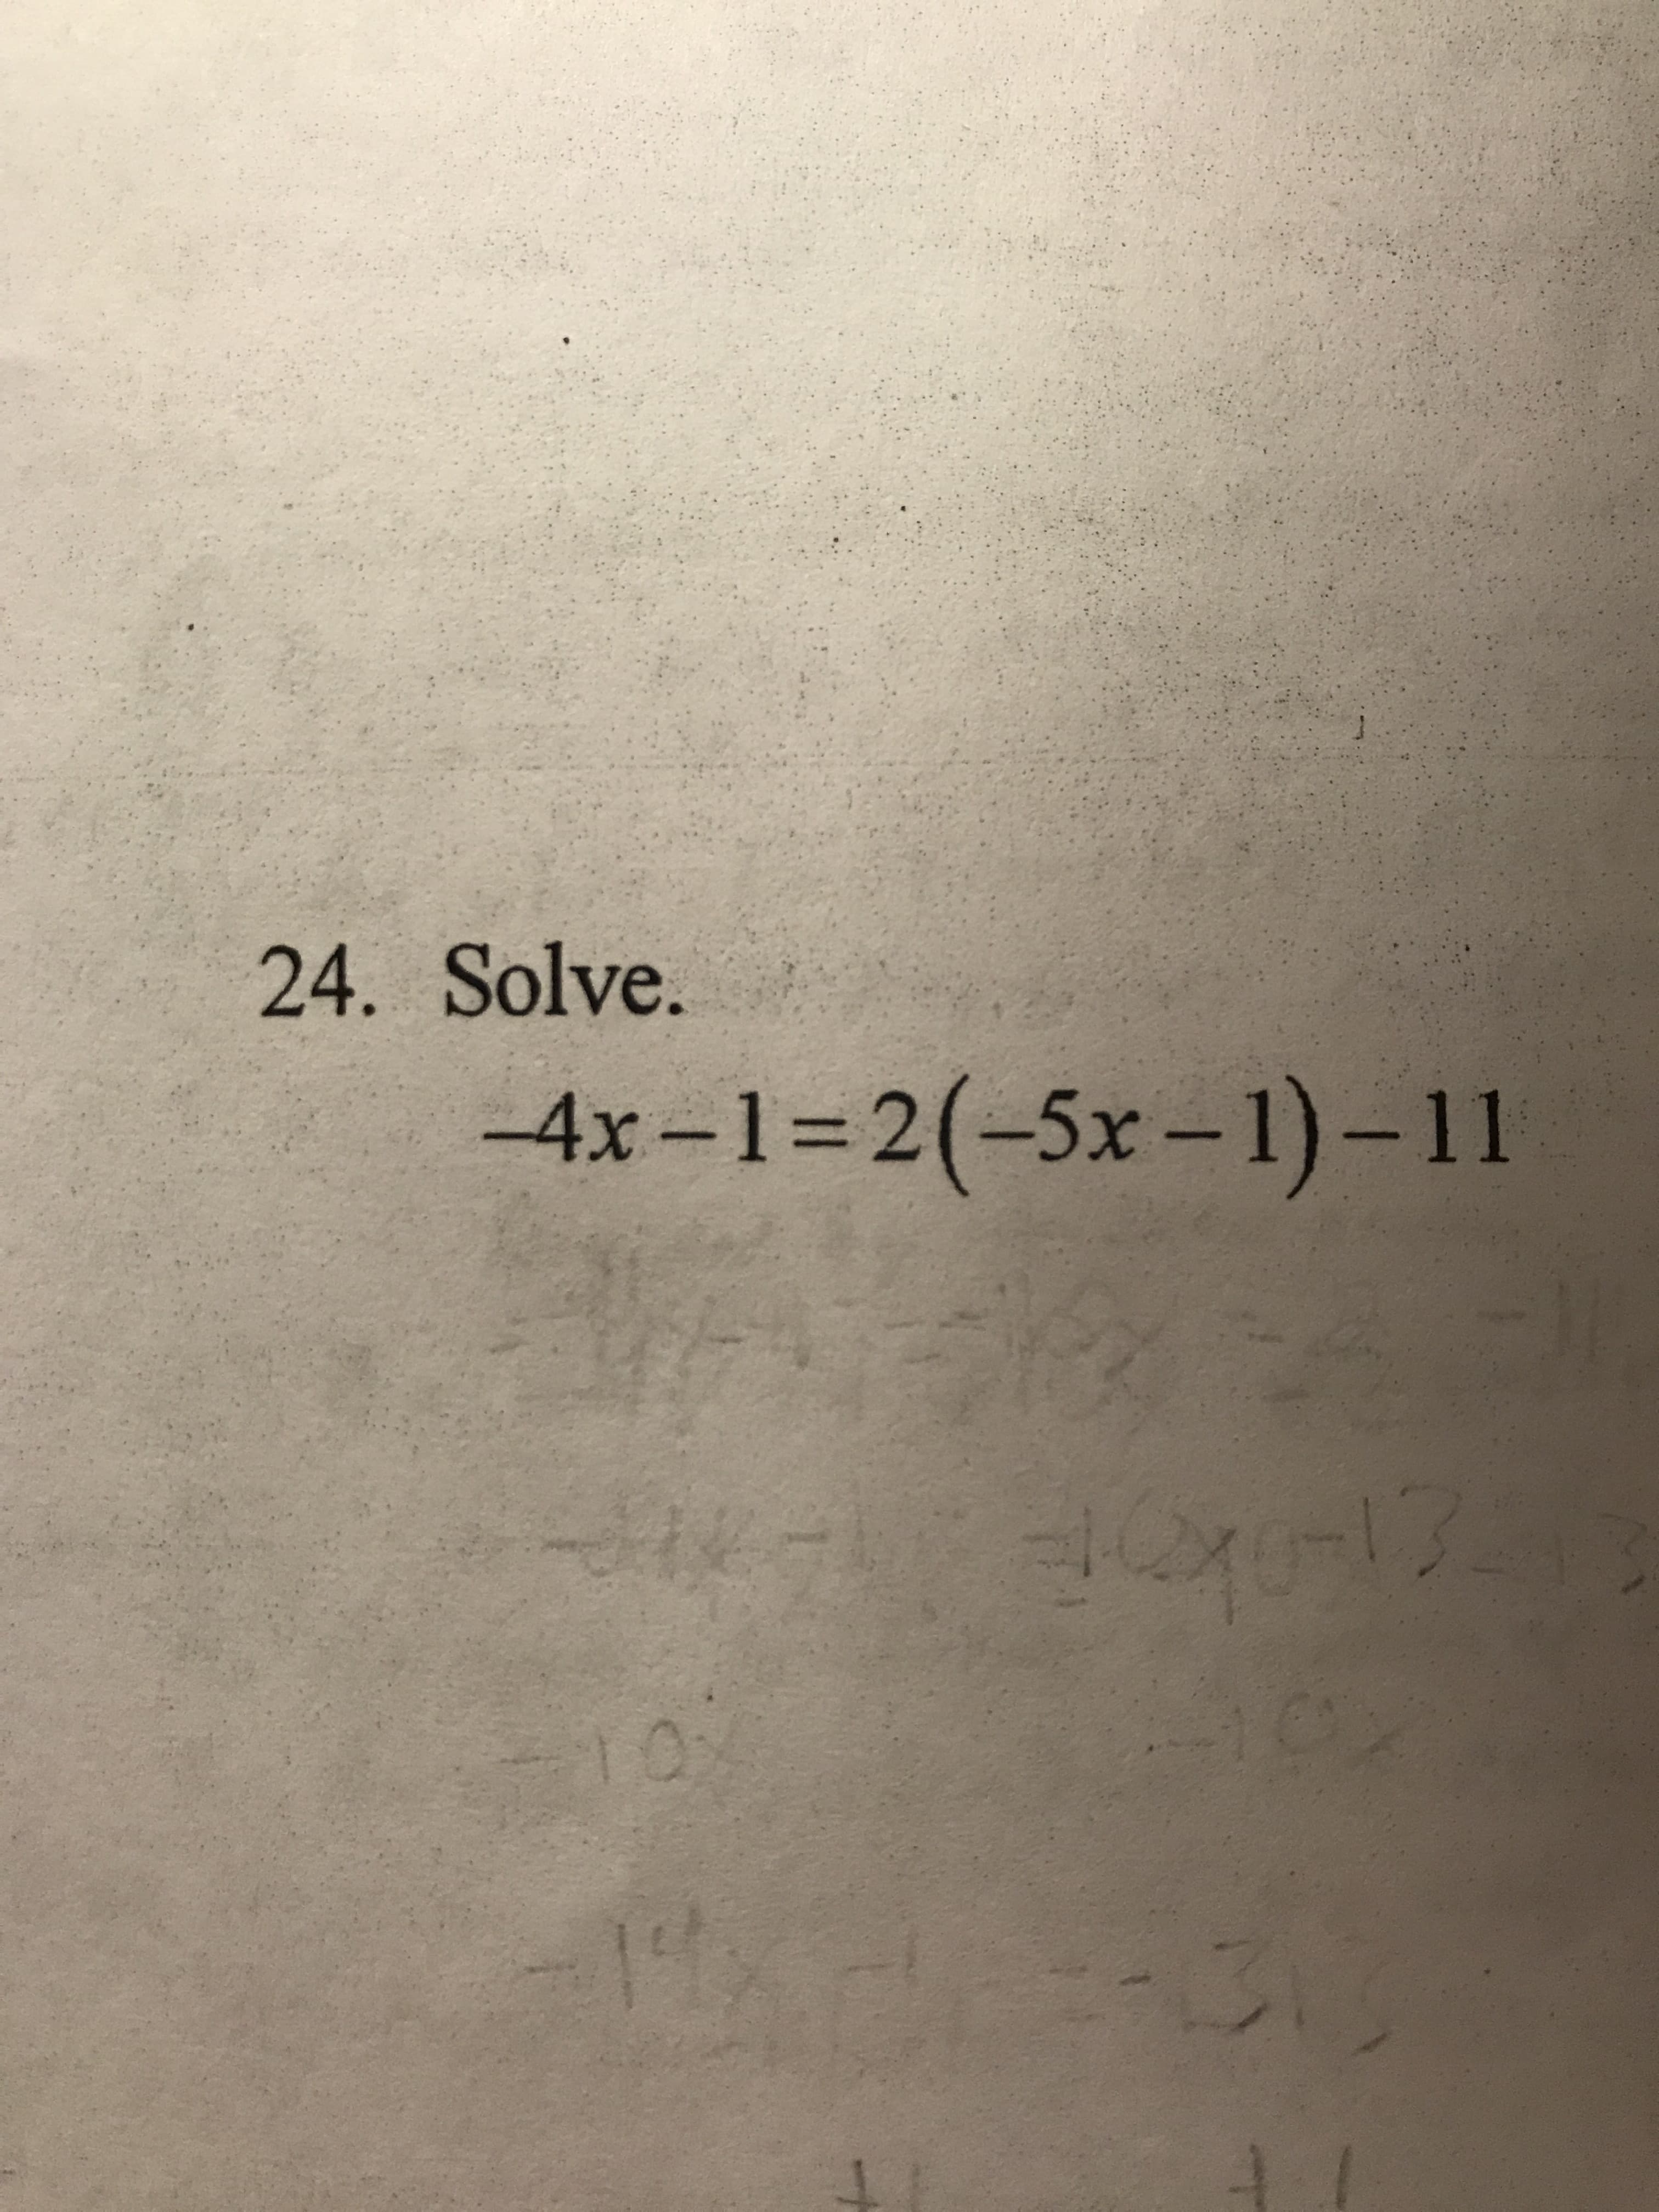 24. Solve.
-4x-1-2(-5-1)-11
X.
